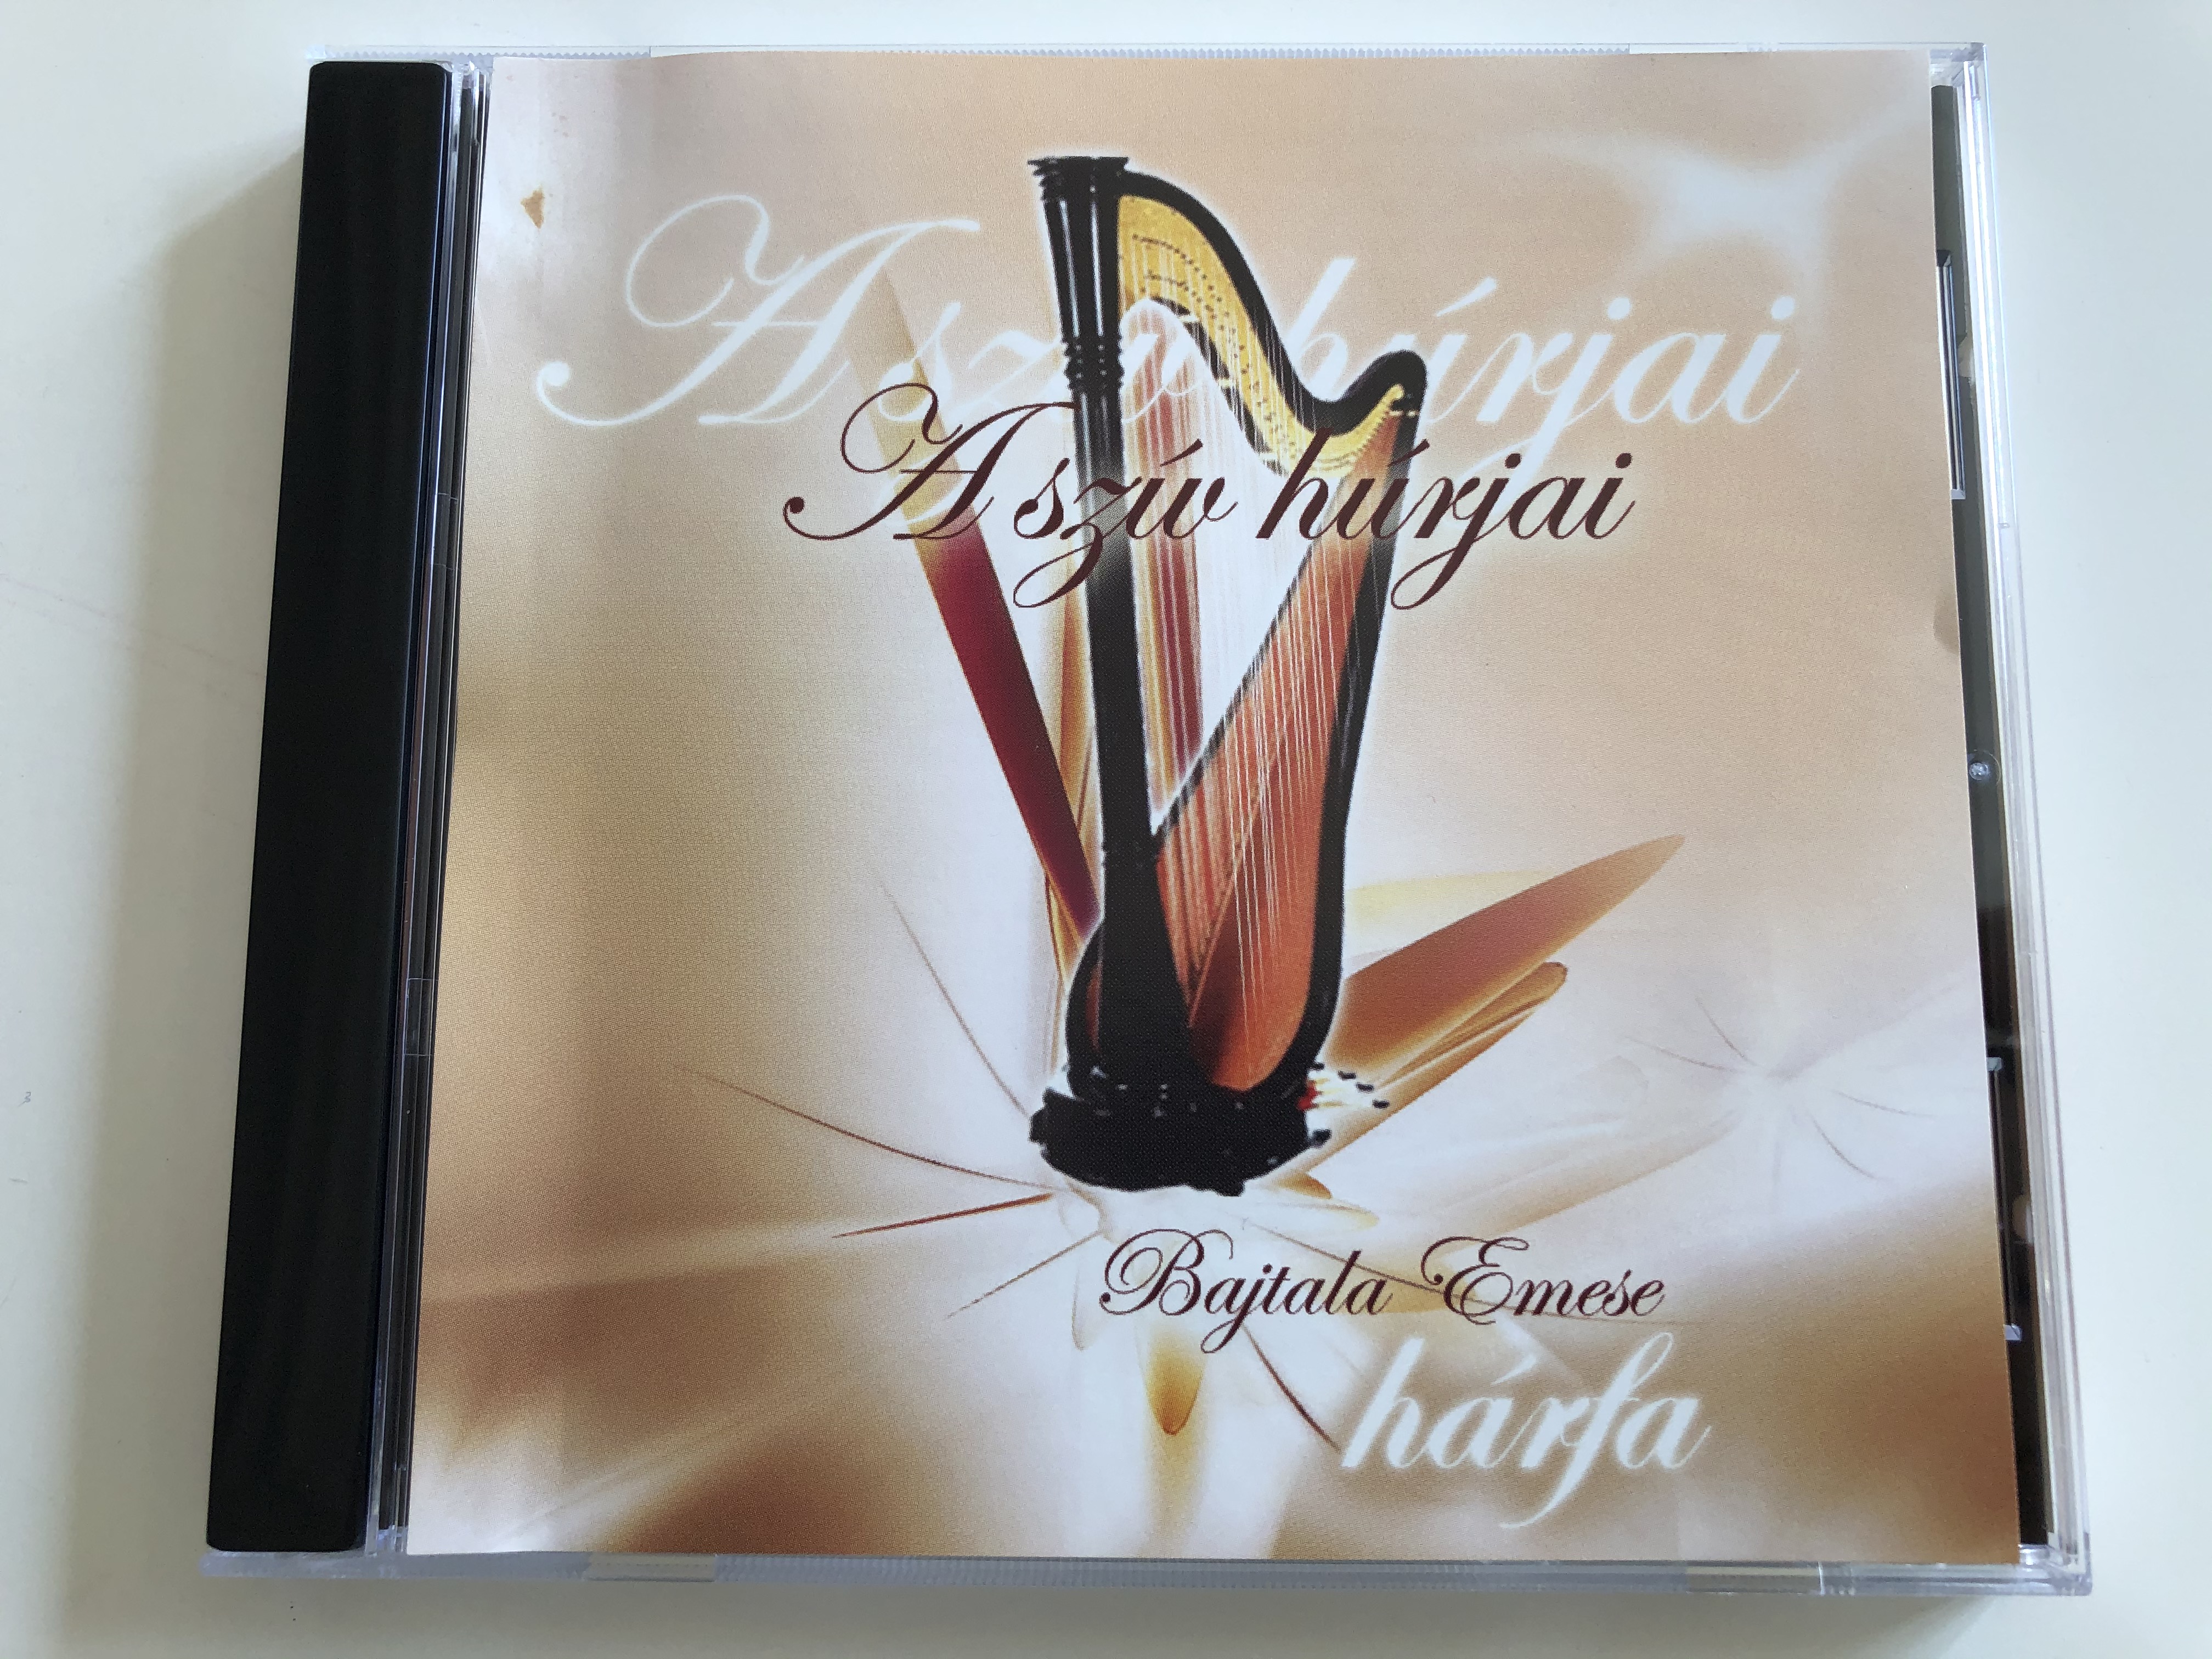 a-sziv-hurjai-bajtala-emese-harfa-kozari-andras-audio-cd-2005-eacd200502-1-.jpg